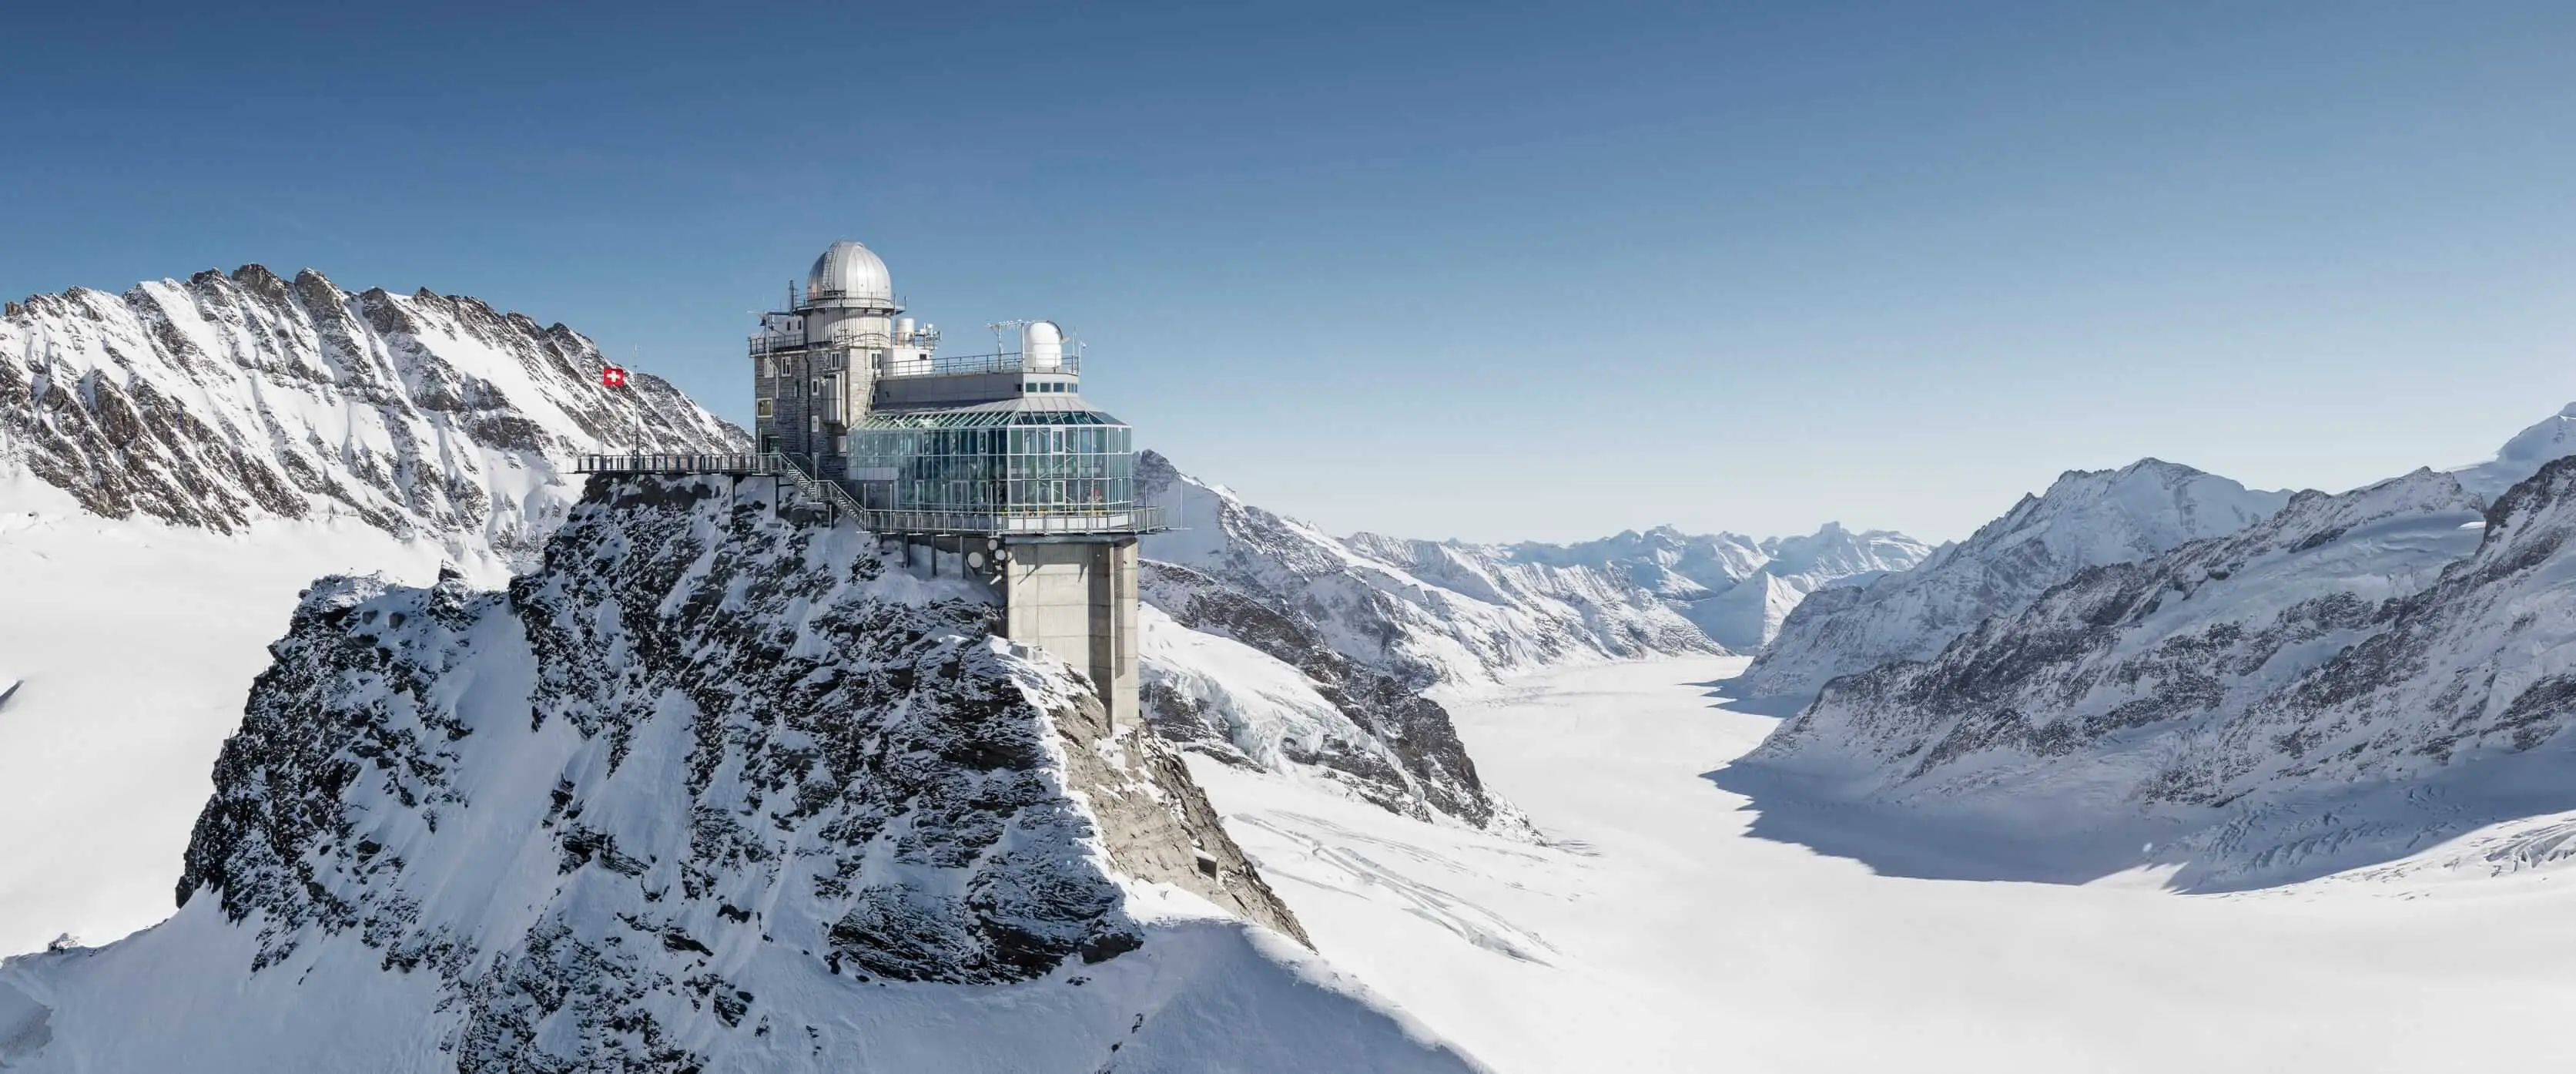 How to get to Grindelwald Switzerland